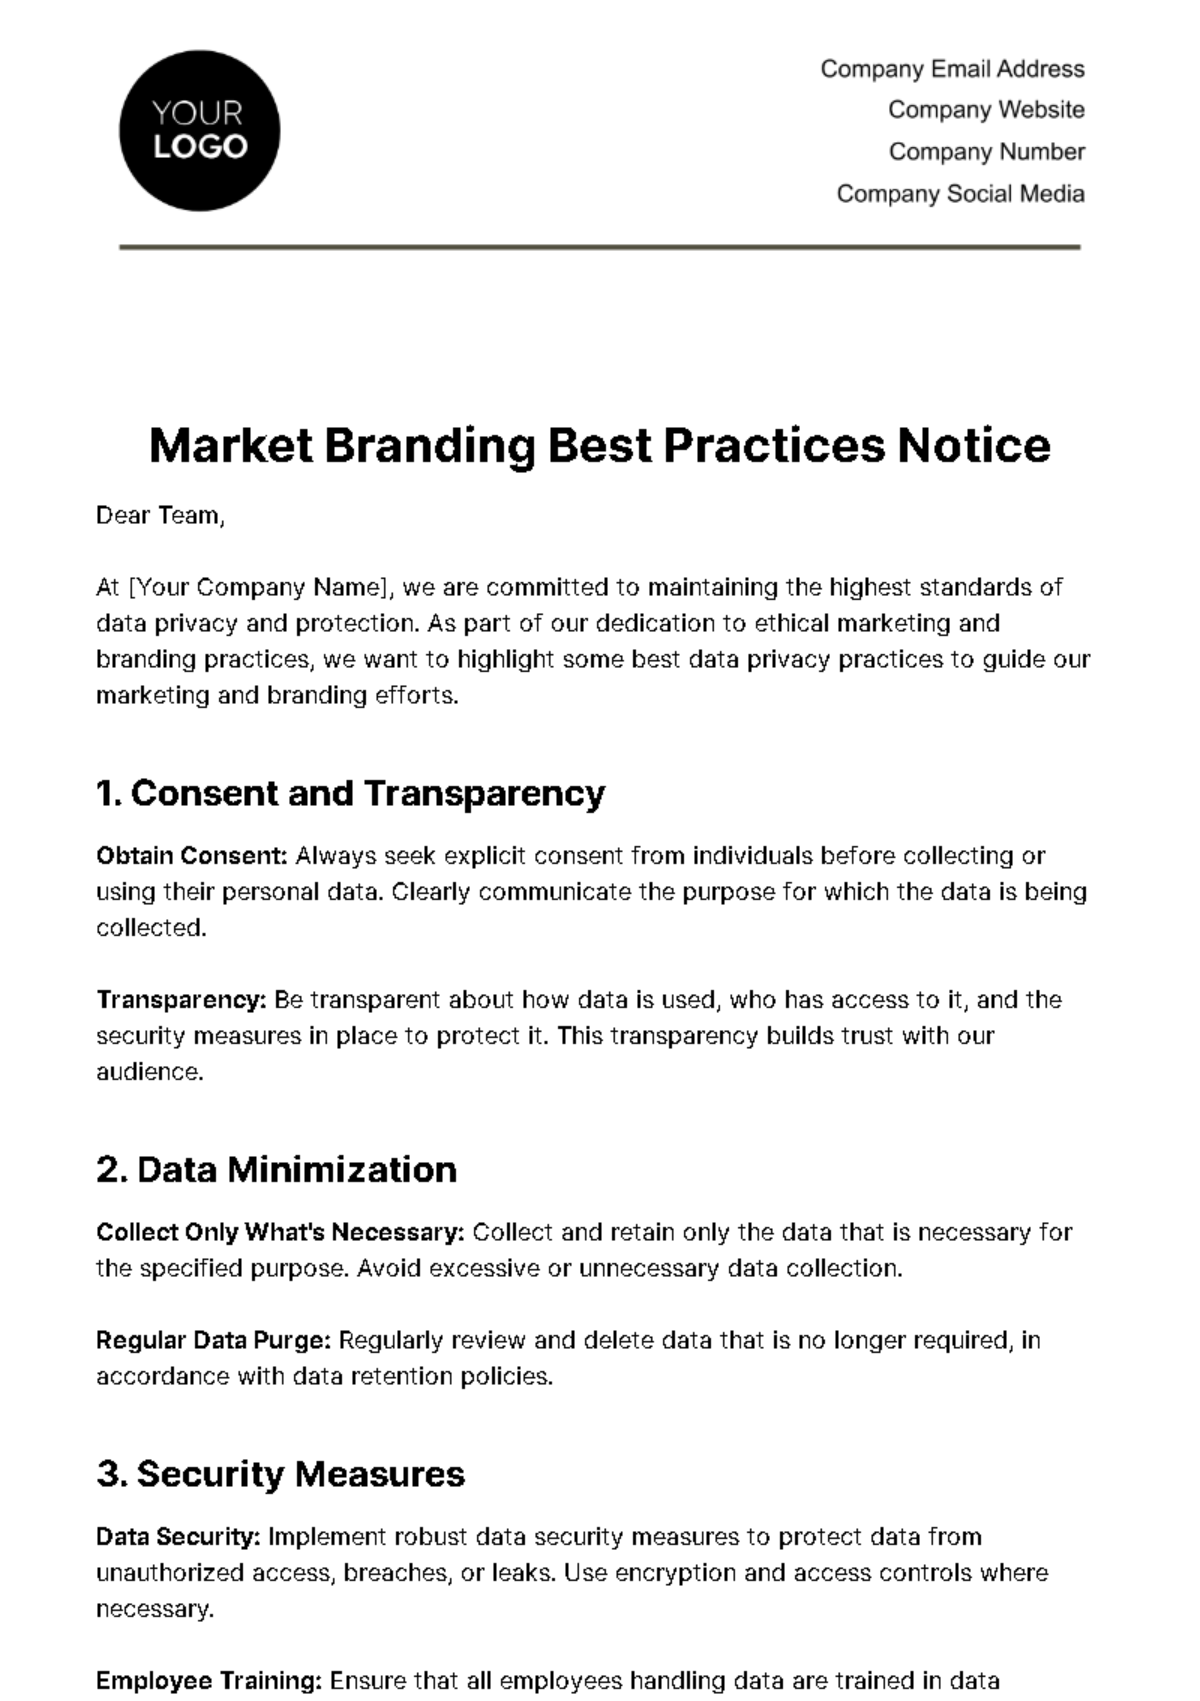 Free Marketing Branding Best Practices Notice Template